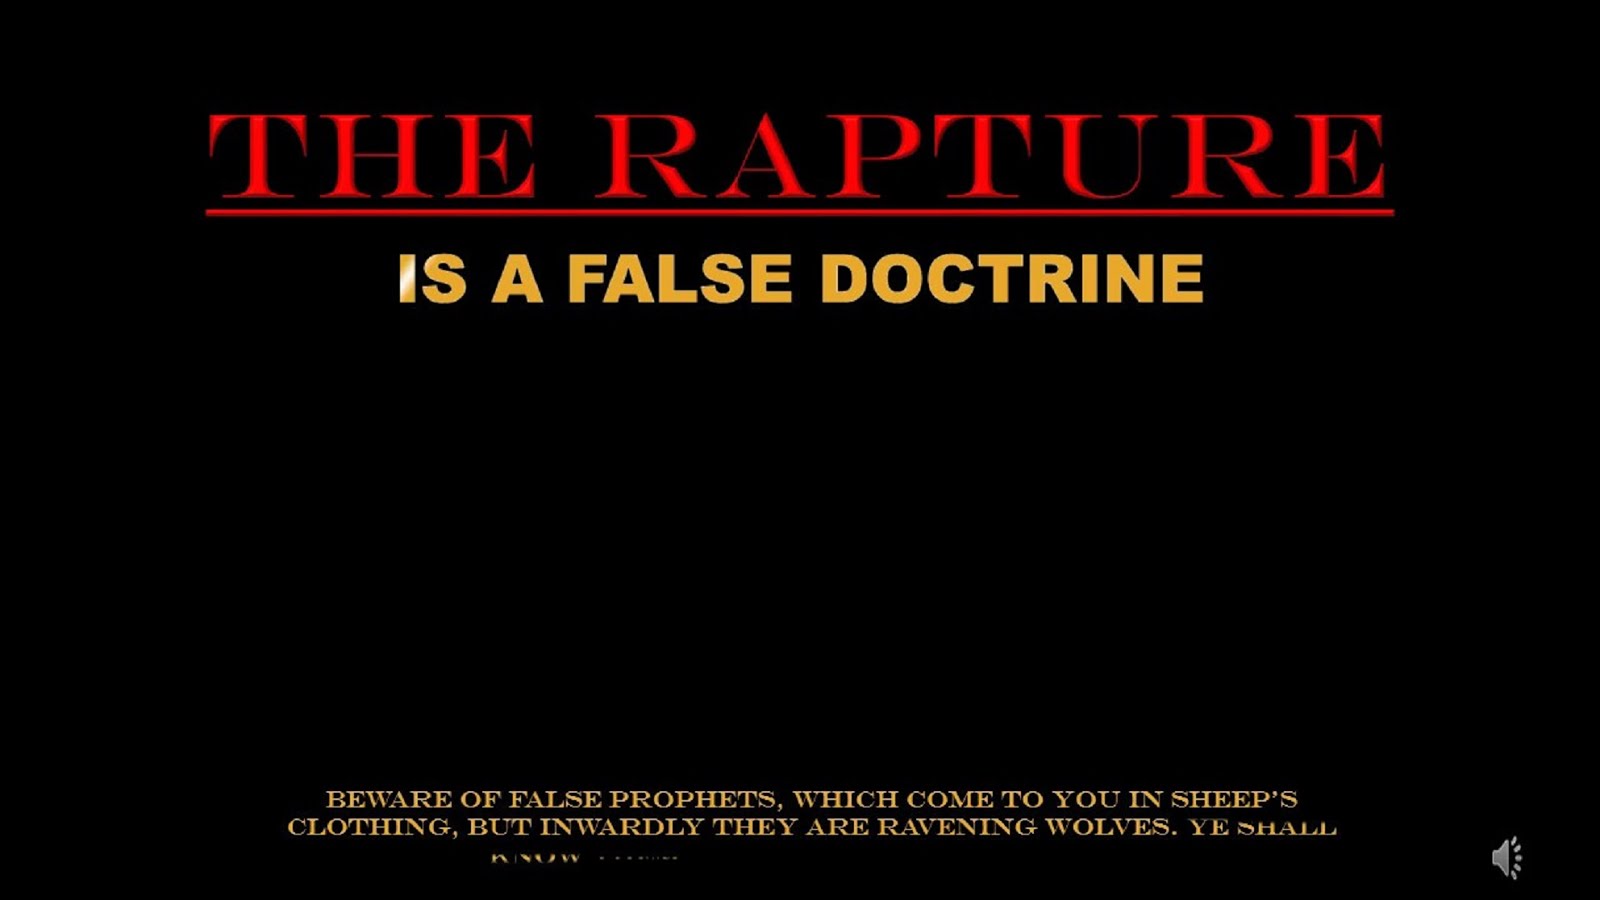 THE RAPTURE IS FALSE DOCTRINE